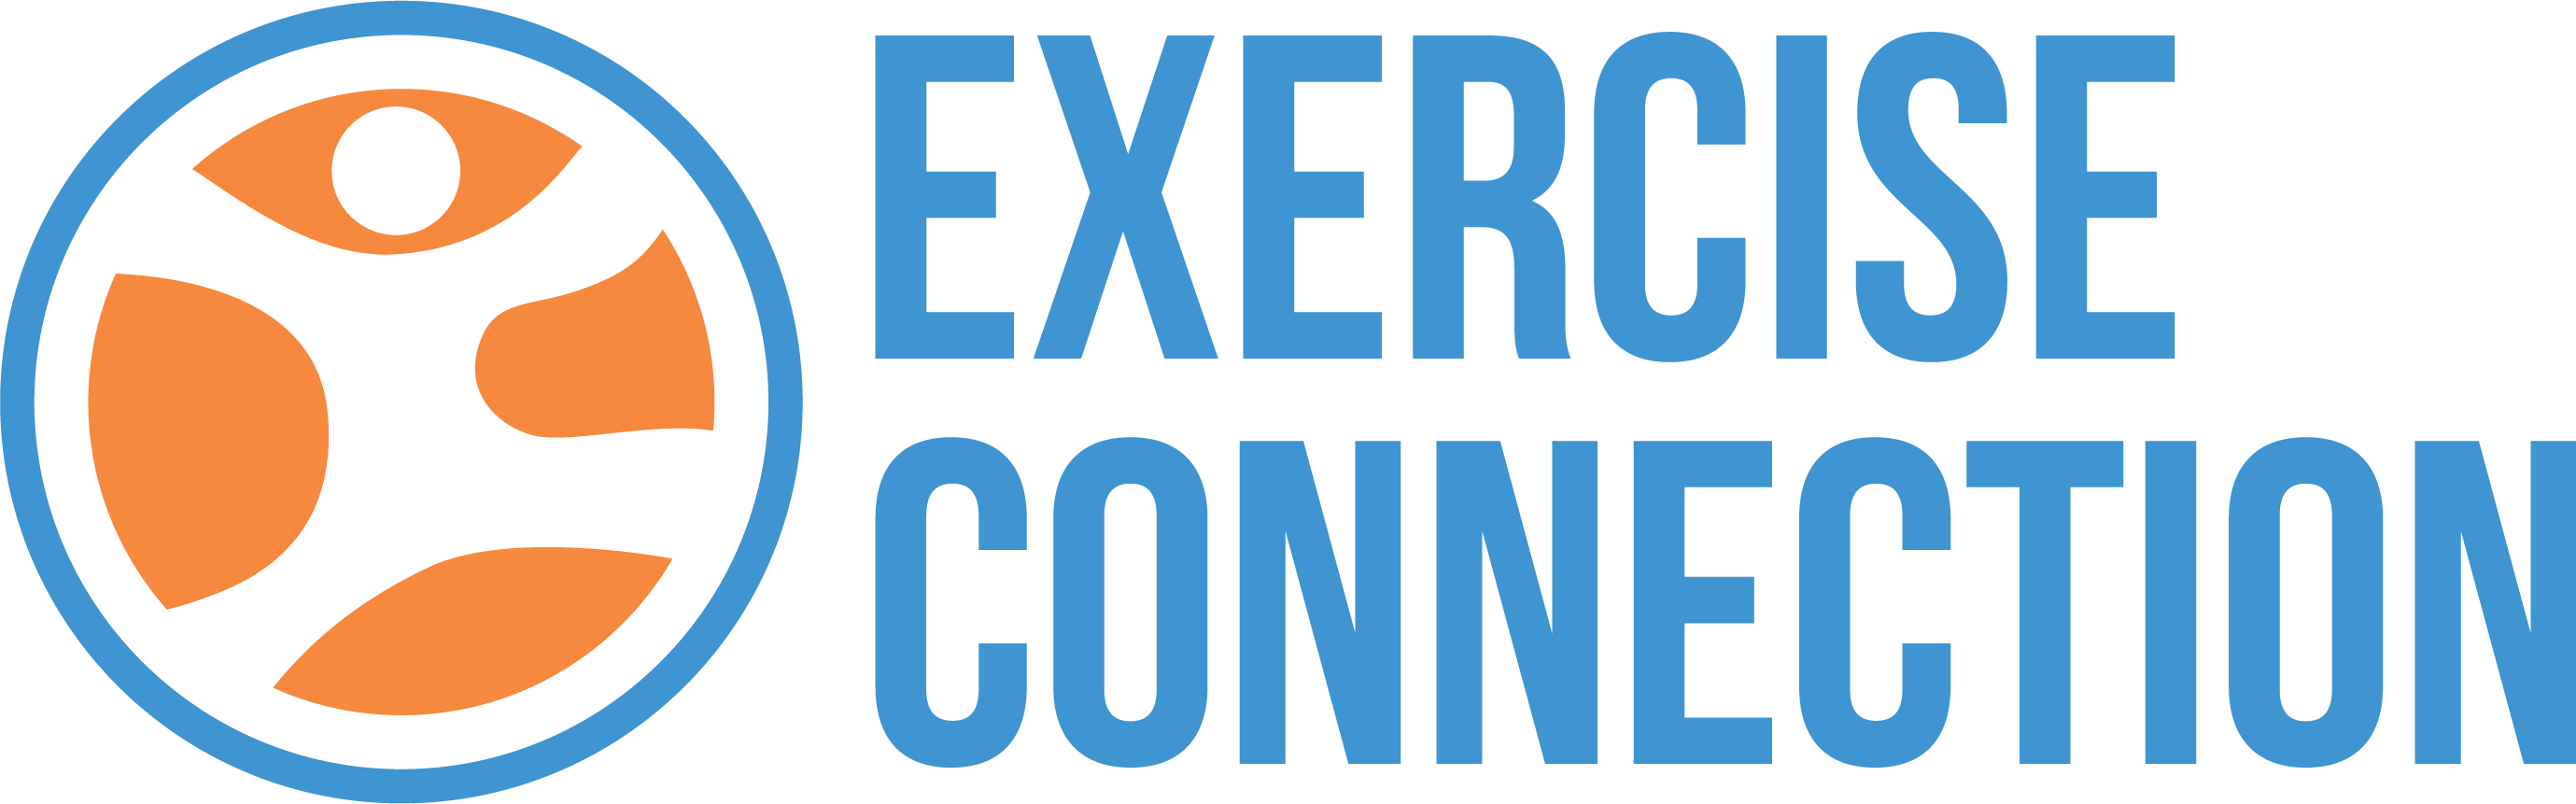 Exercise Connection Logo